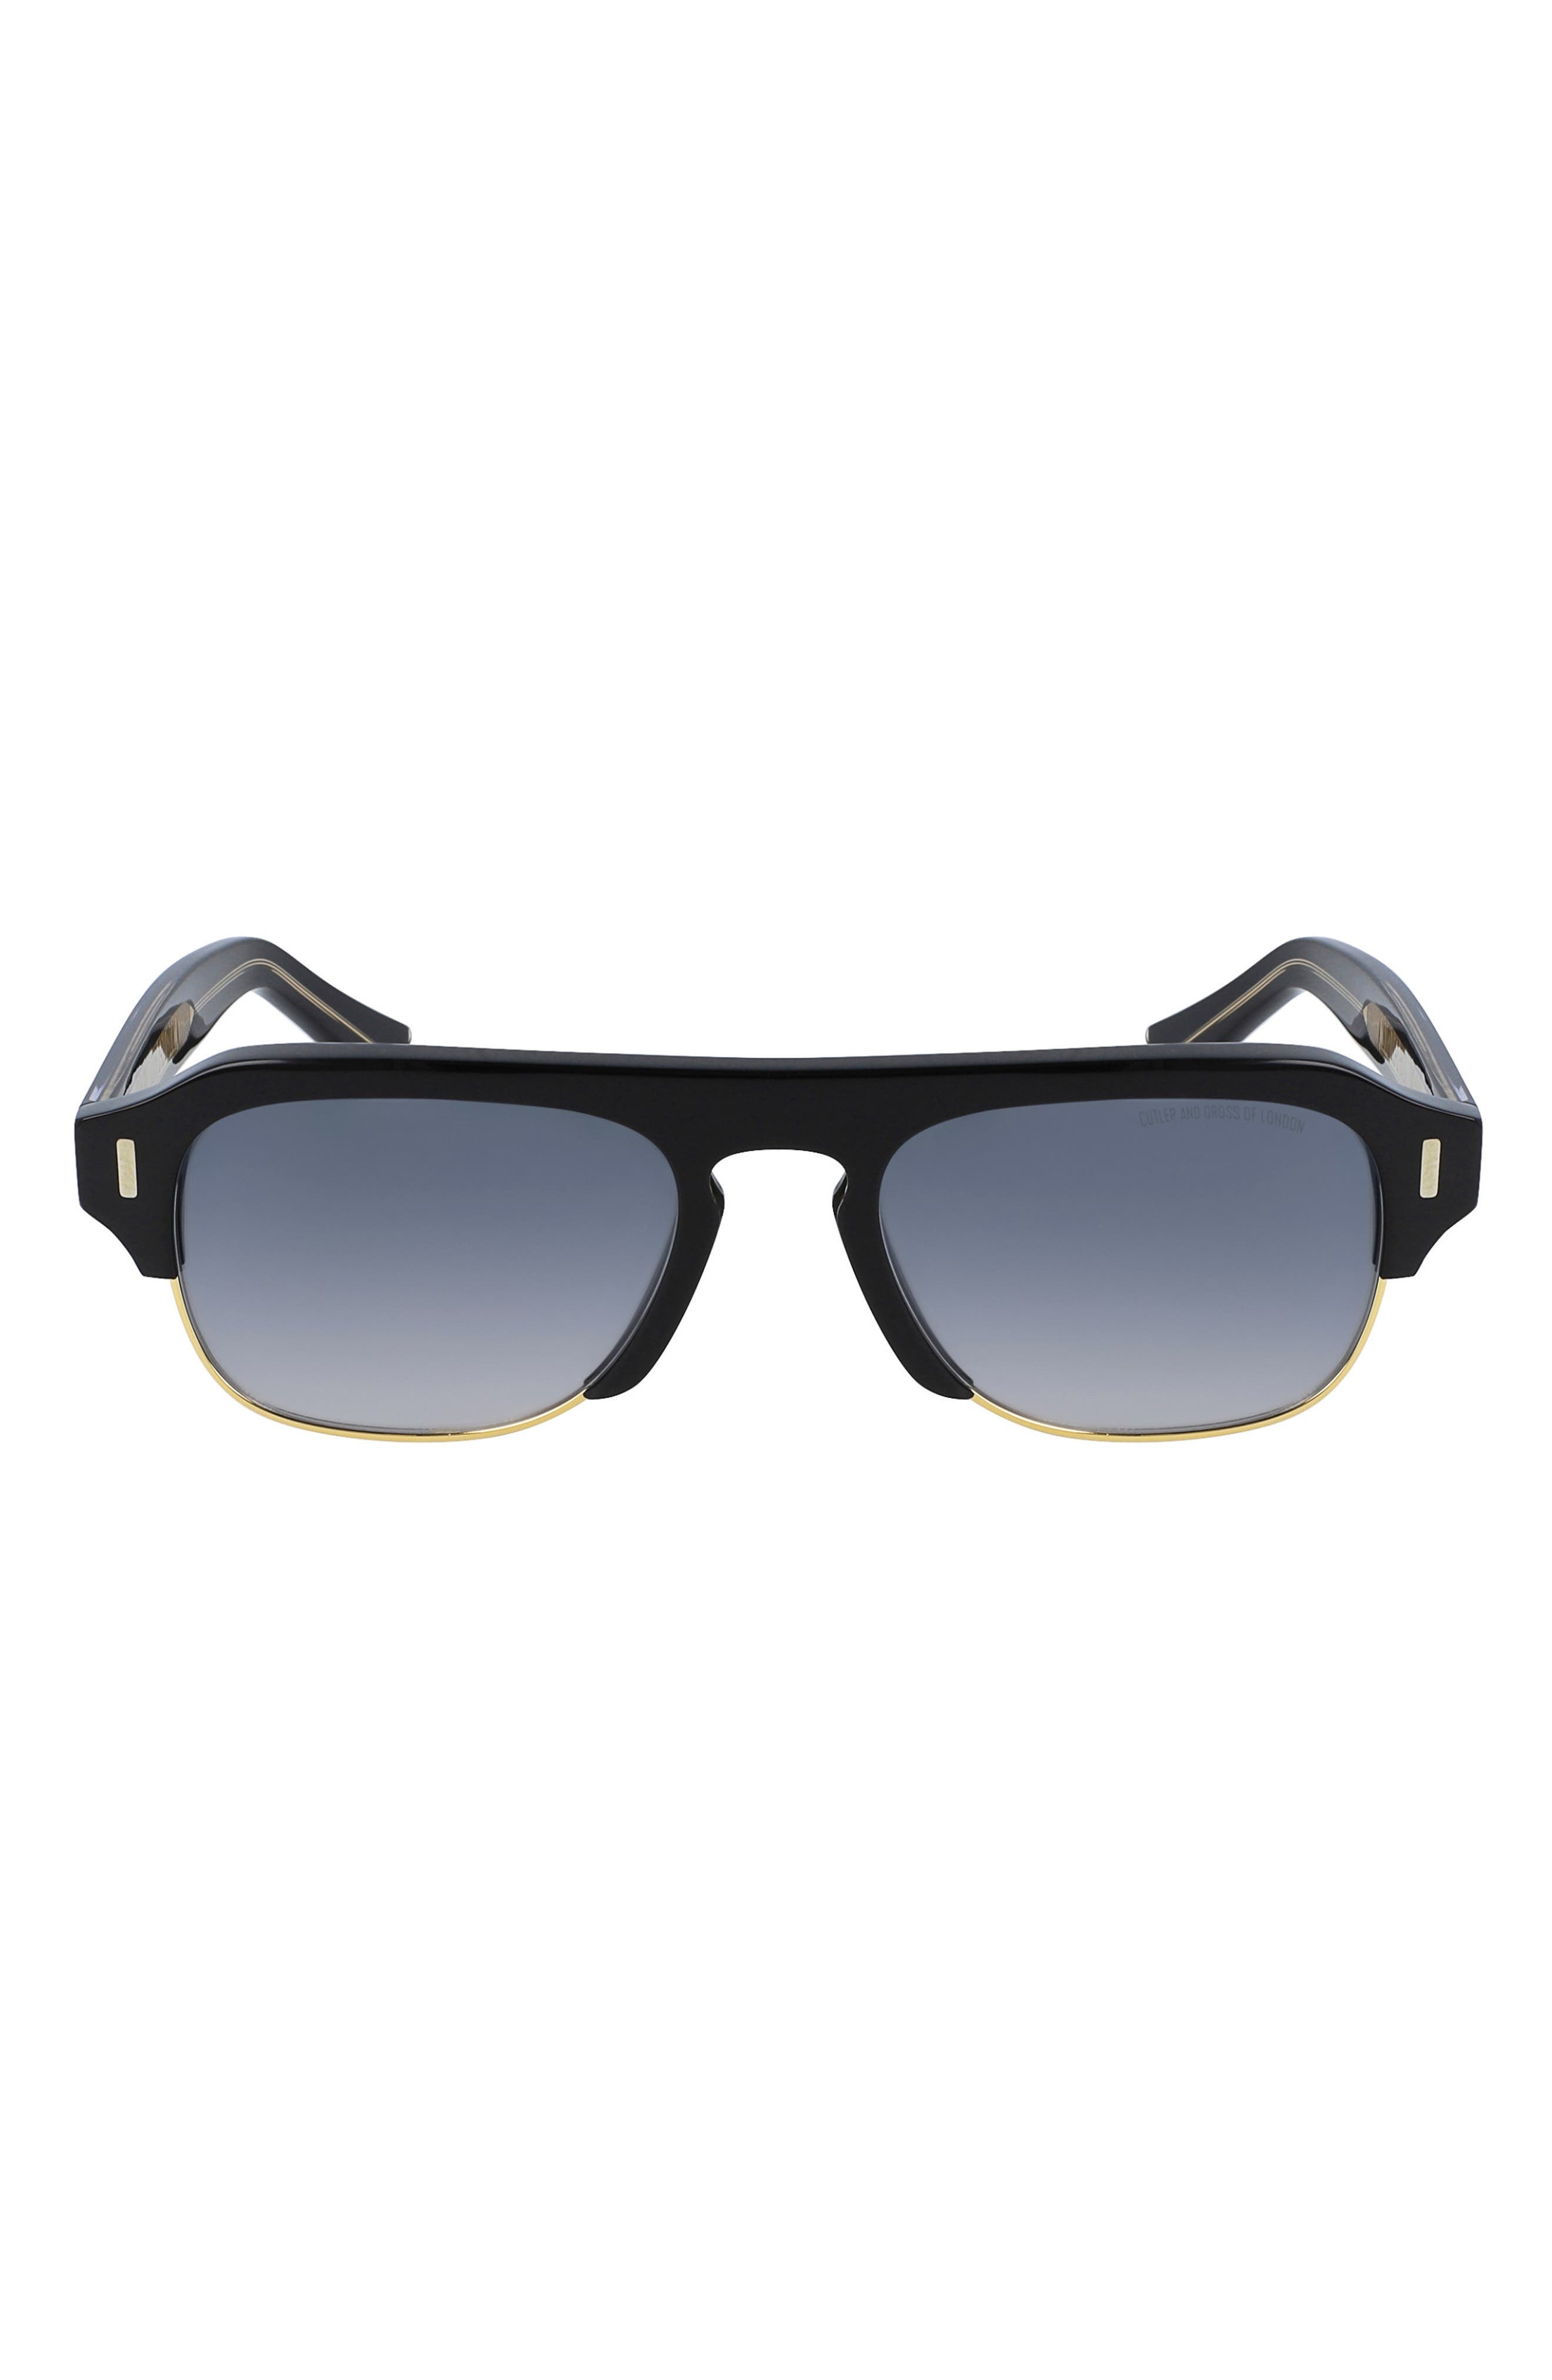 56mm Flat Top Sunglasses in Black/Grey Gradient - 1